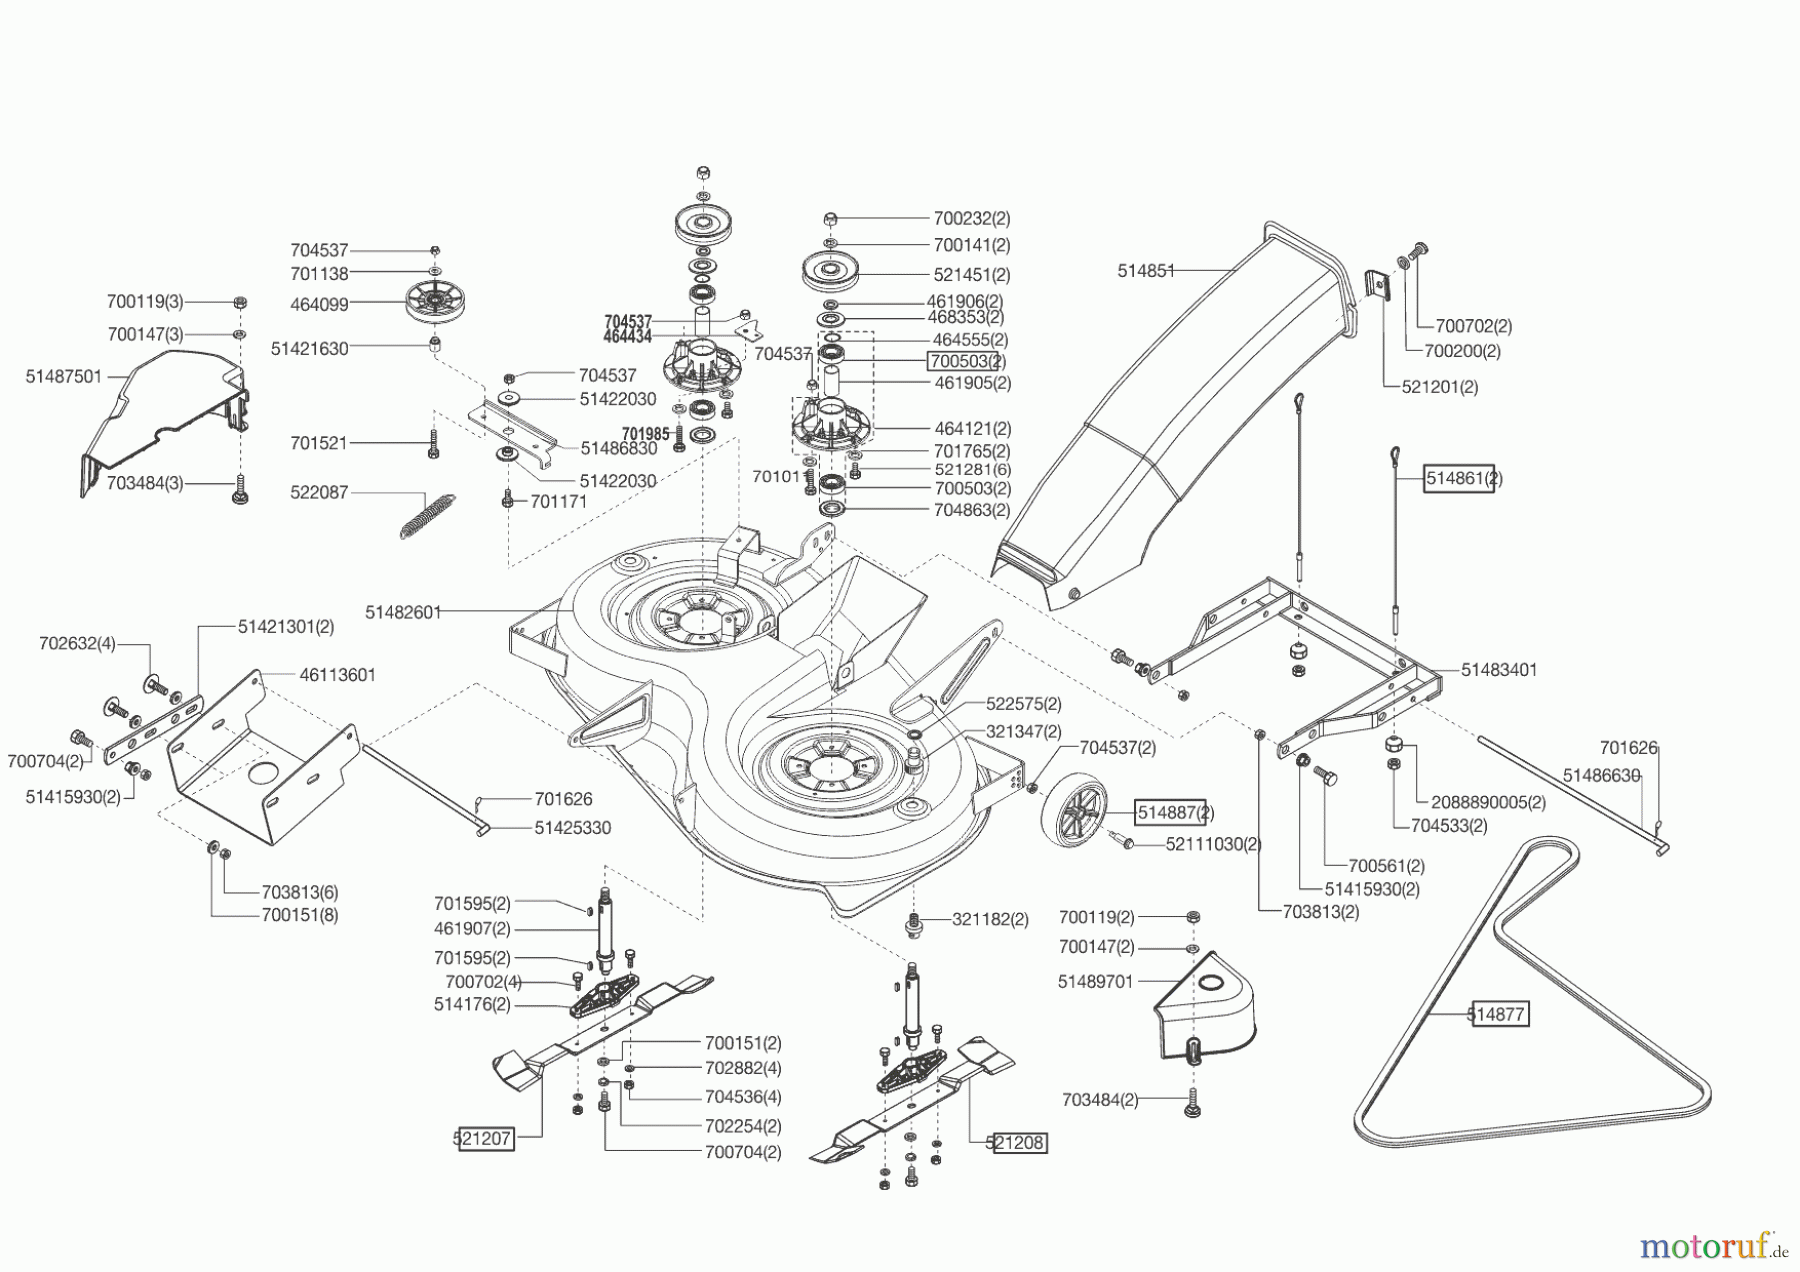  AL-KO Gartentechnik Rasentraktor T 20-102 HD Gulistan  ab 03/2015 Seite 5